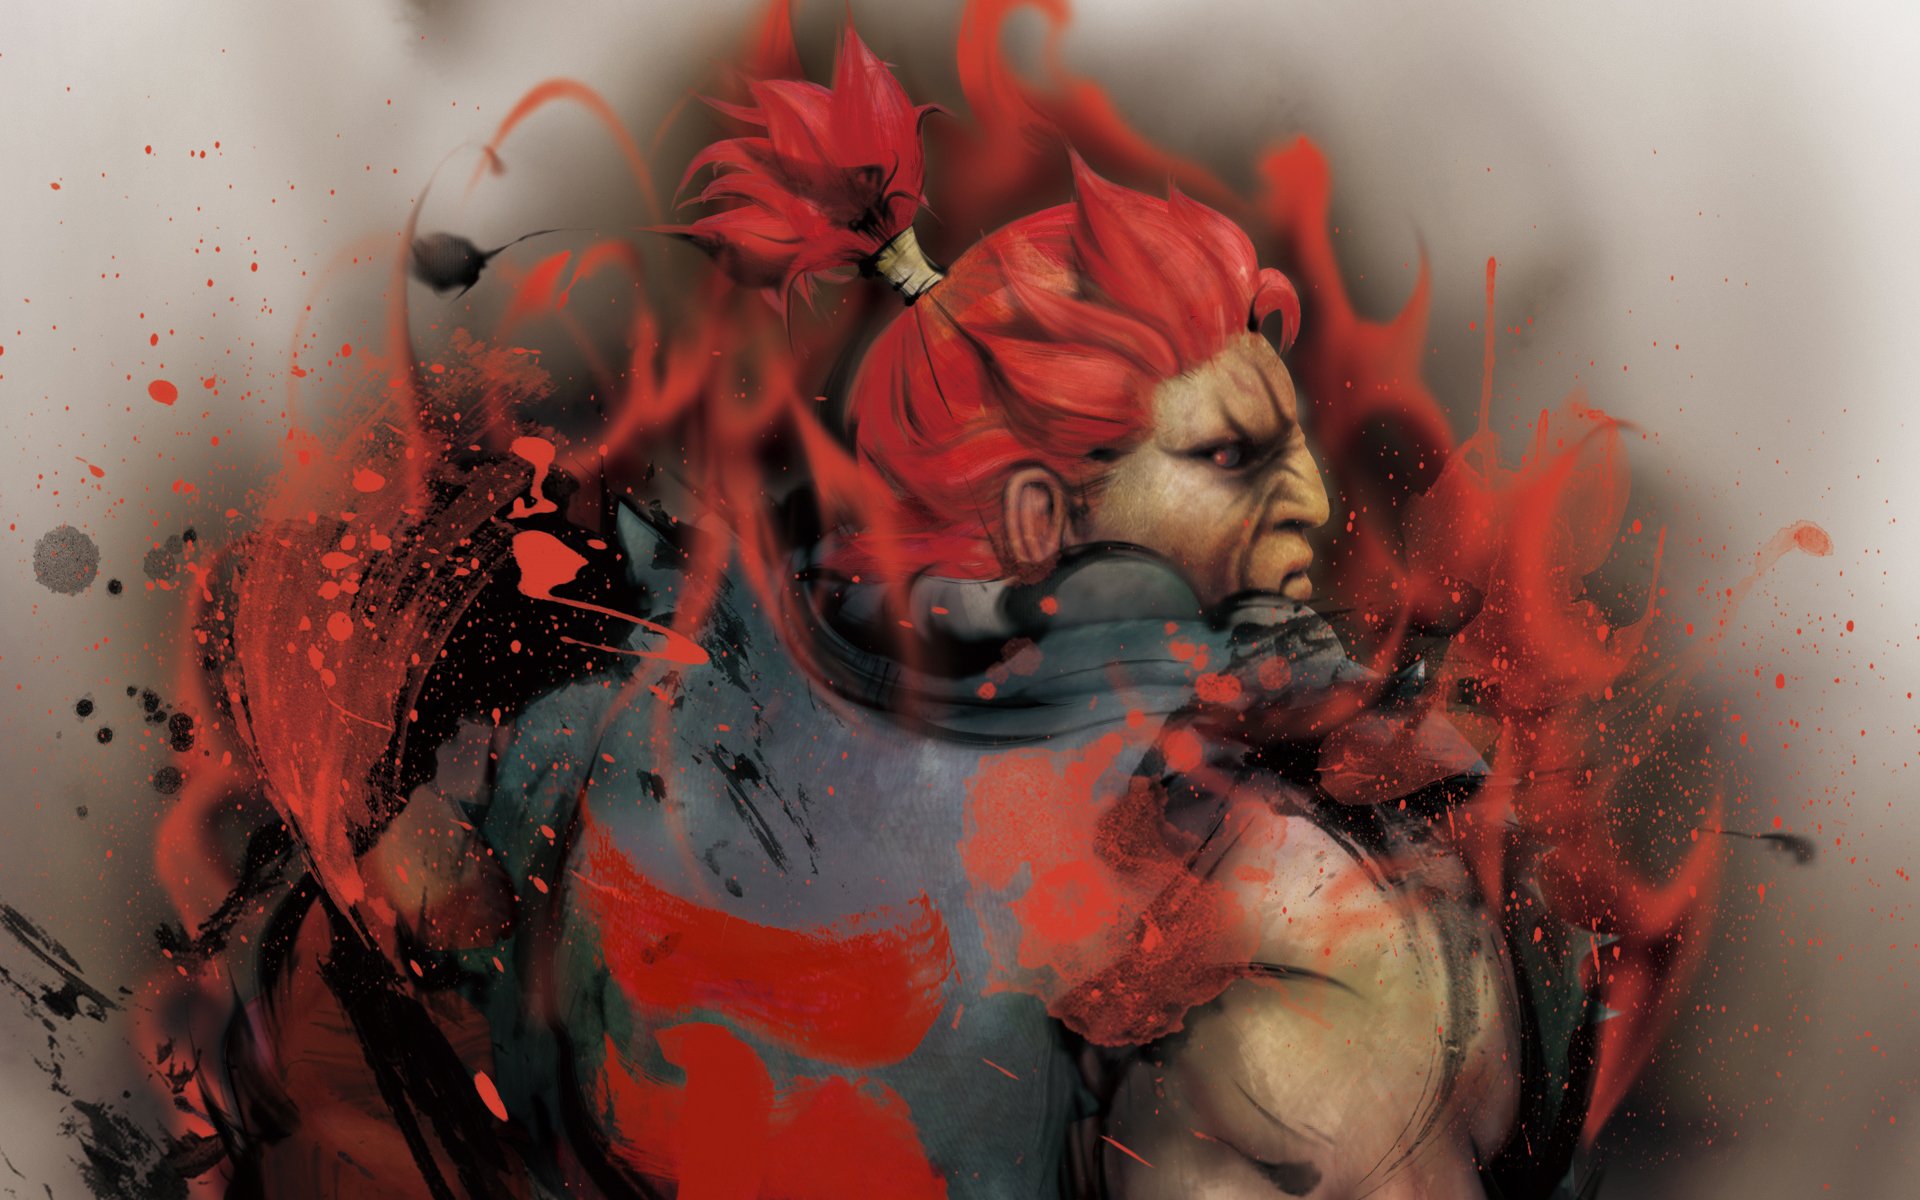 Akuma (Street Fighter) - Desktop Wallpapers, Phone Wallpaper, PFP, Gifs,  and More!